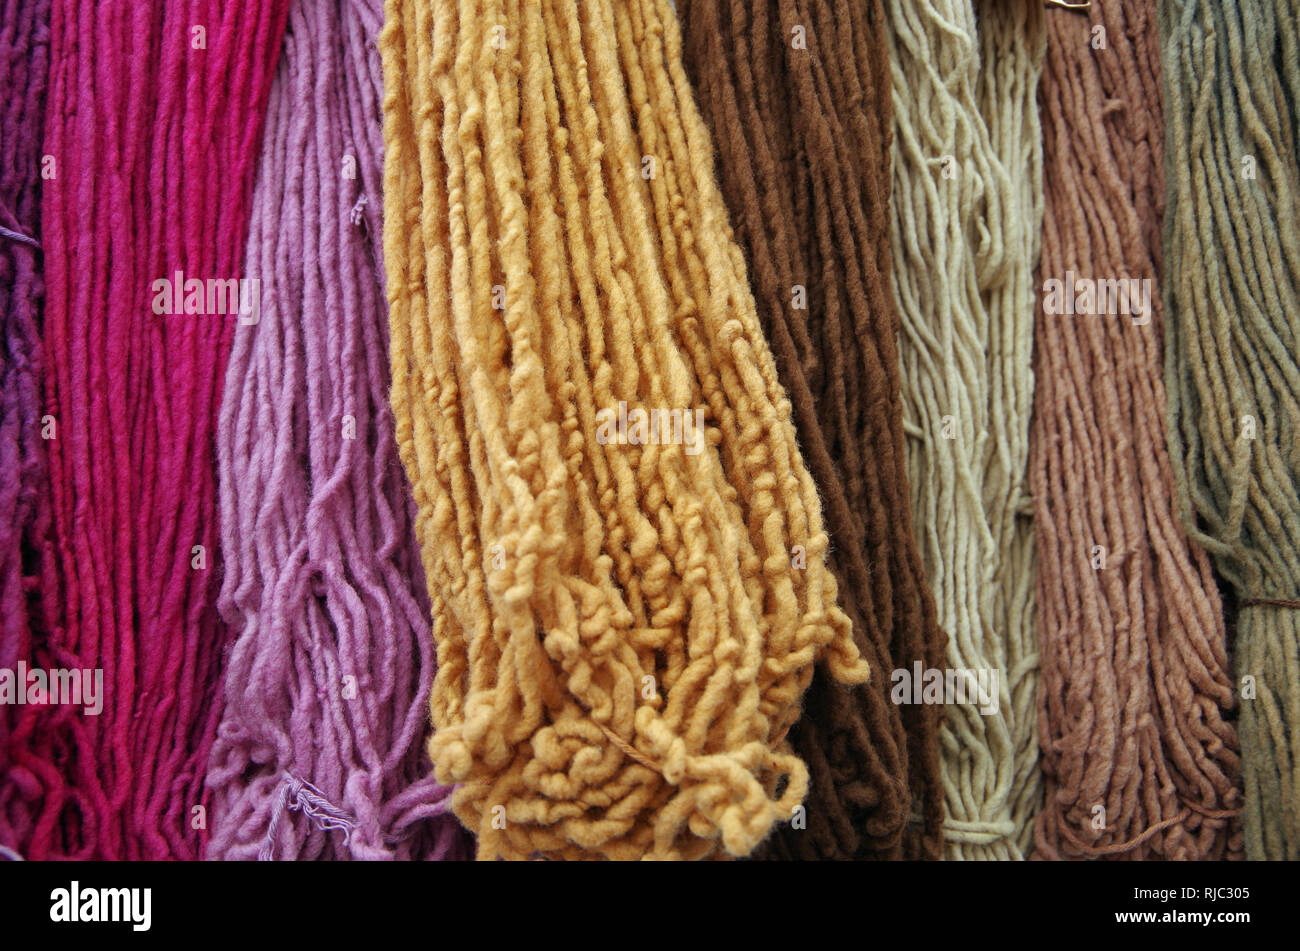 https://c8.alamy.com/comp/RJC305/merino-wool-colorful-dyed-textile-long-hanging-strands-RJC305.jpg